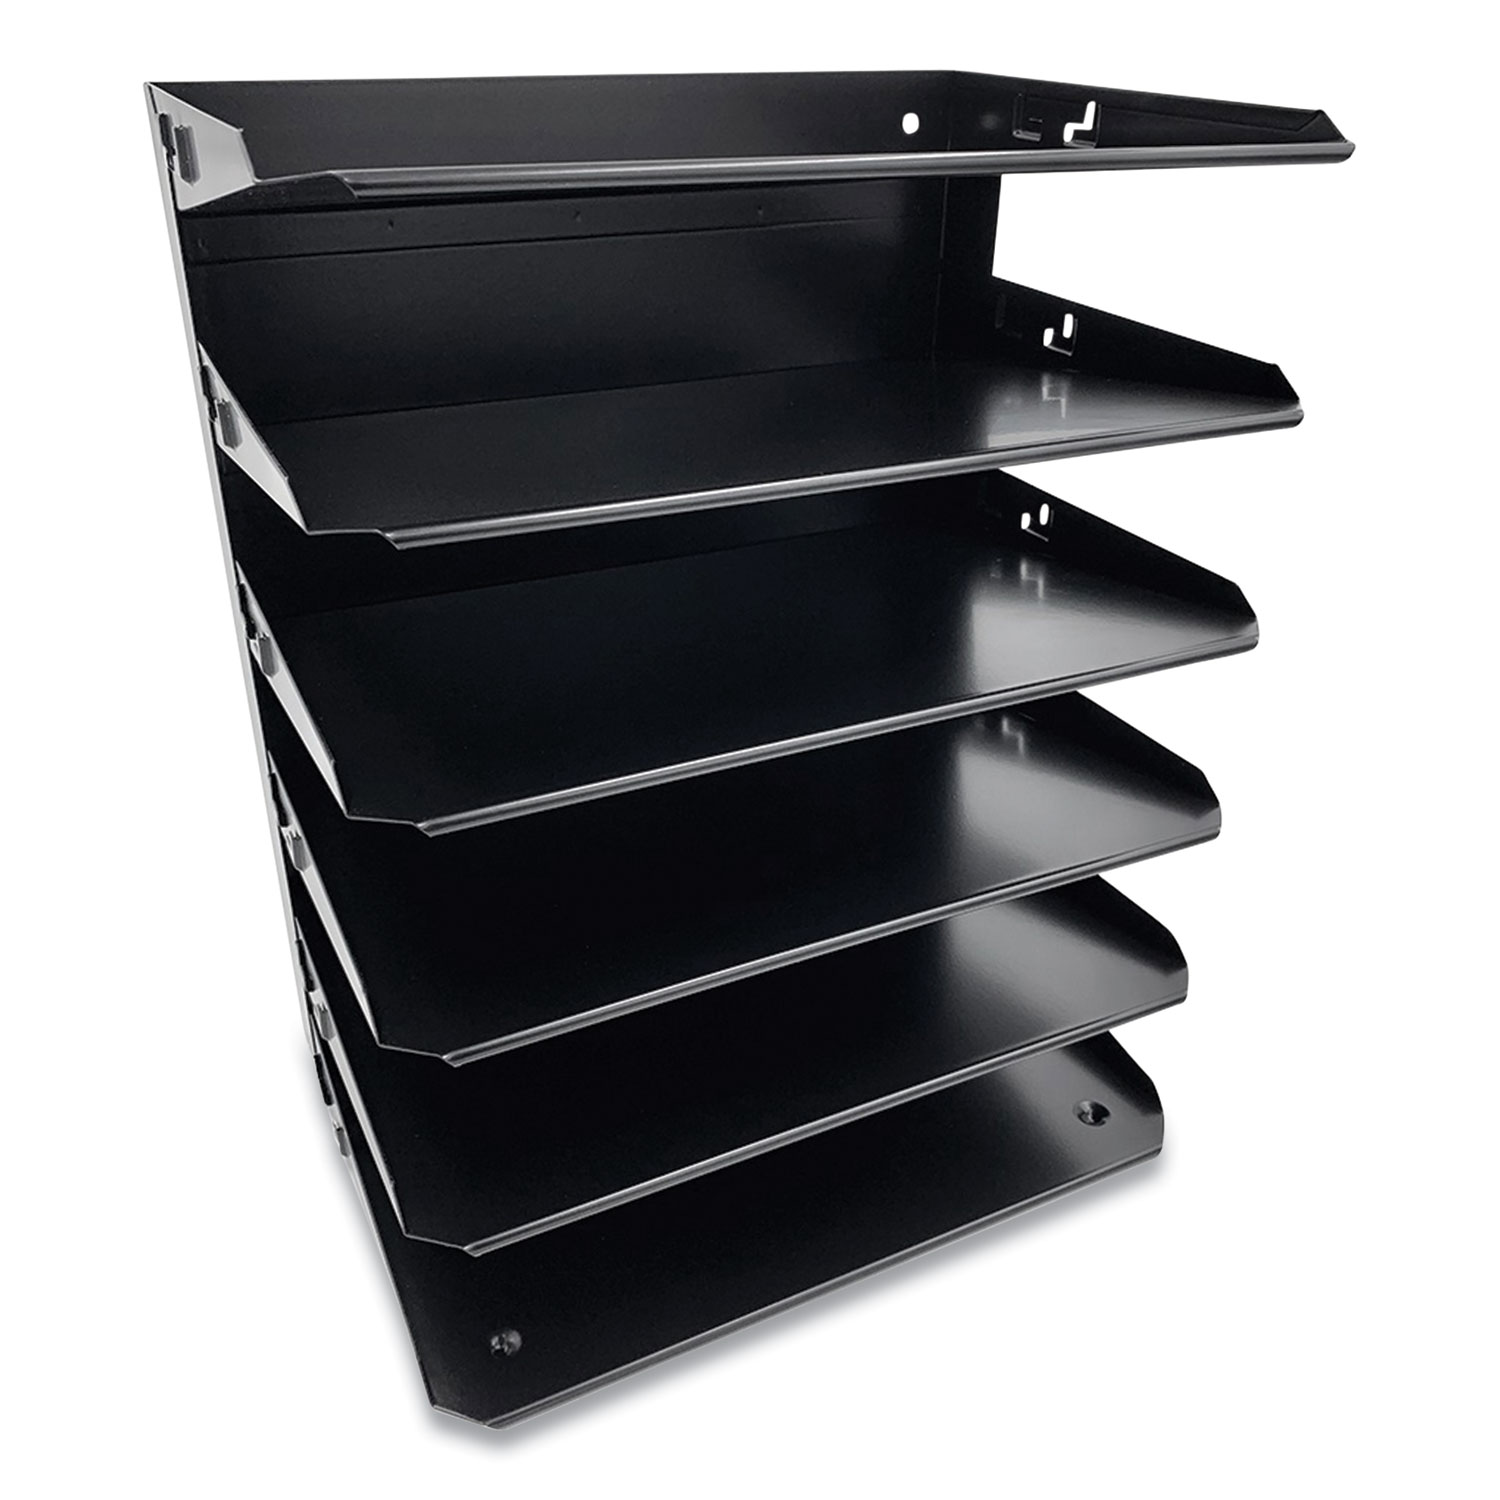 Huron Steel Horizontal File Organizer, 6 Sections, Letter Size Files, 8.75 x 12 x 15, Black